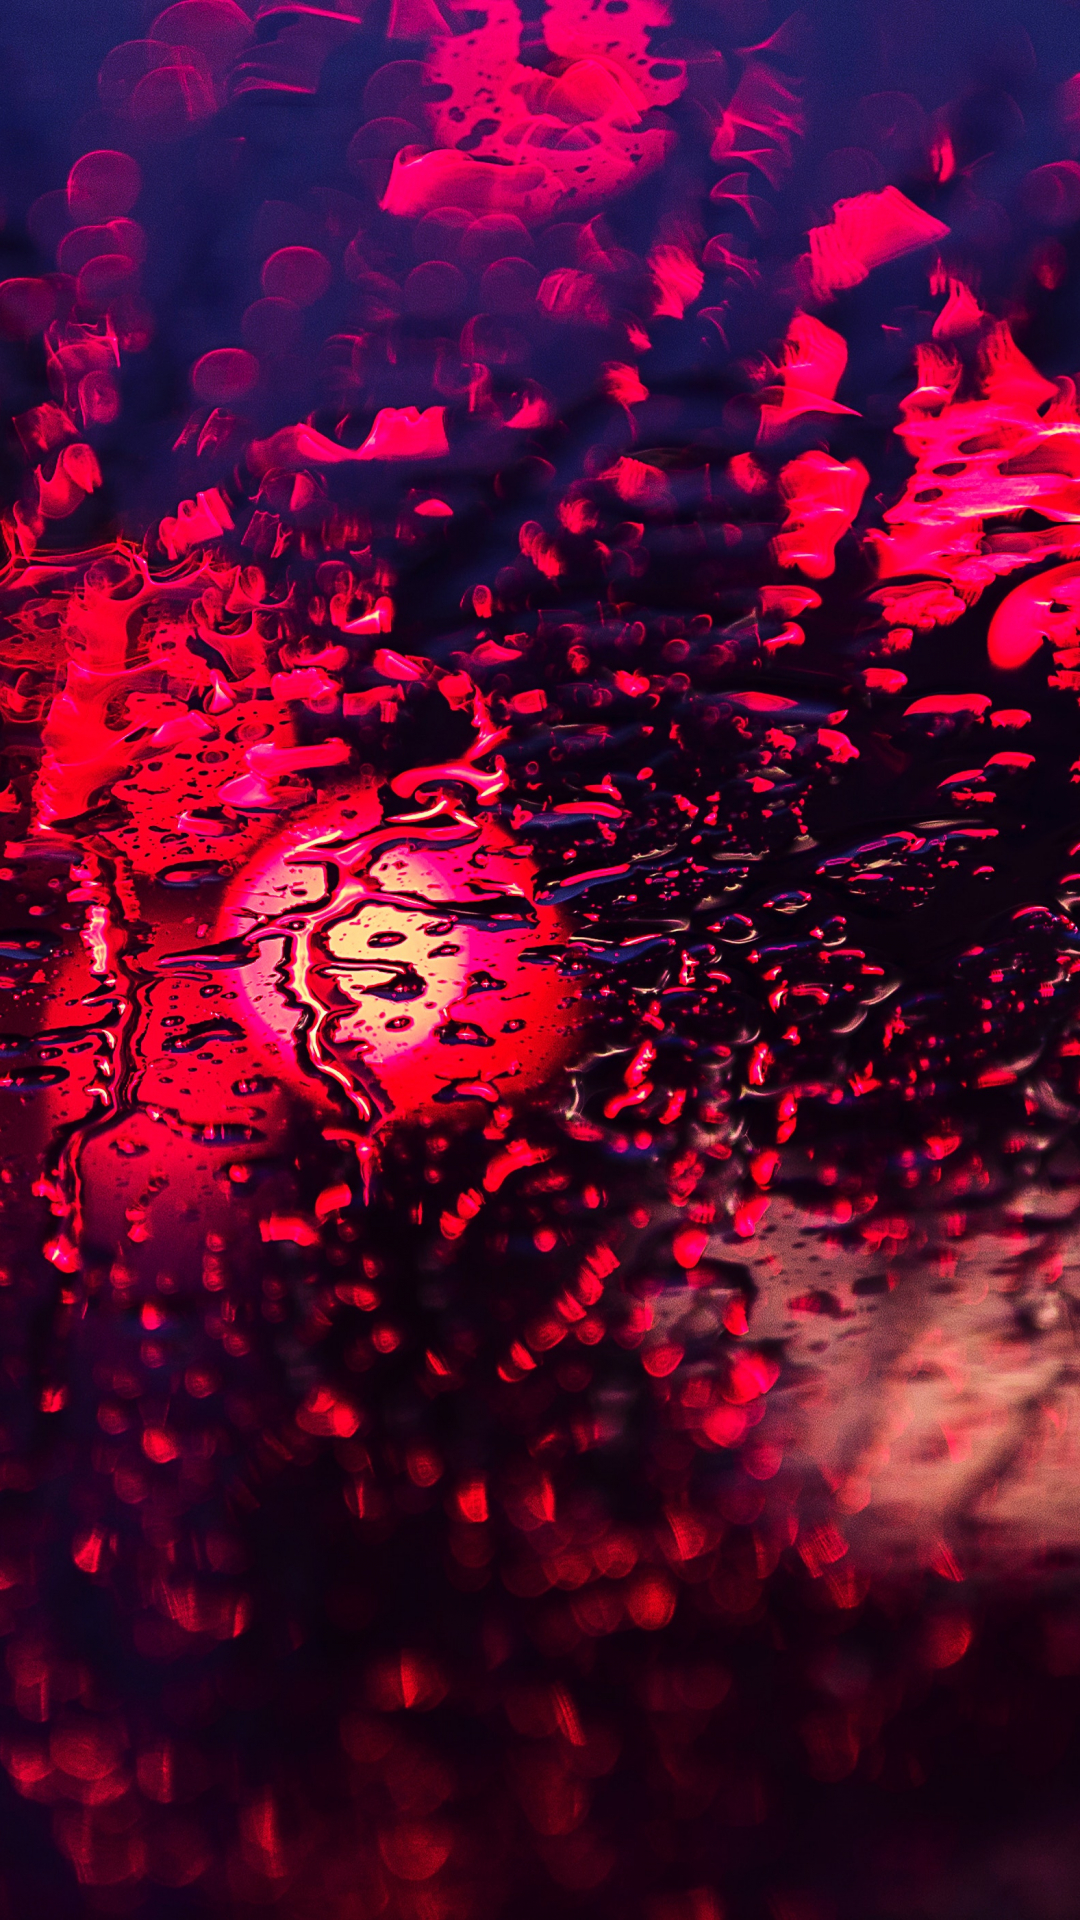 Rain Again Iphone Wallpaper - All The Things She Said Dimitri Vegas - HD Wallpaper 